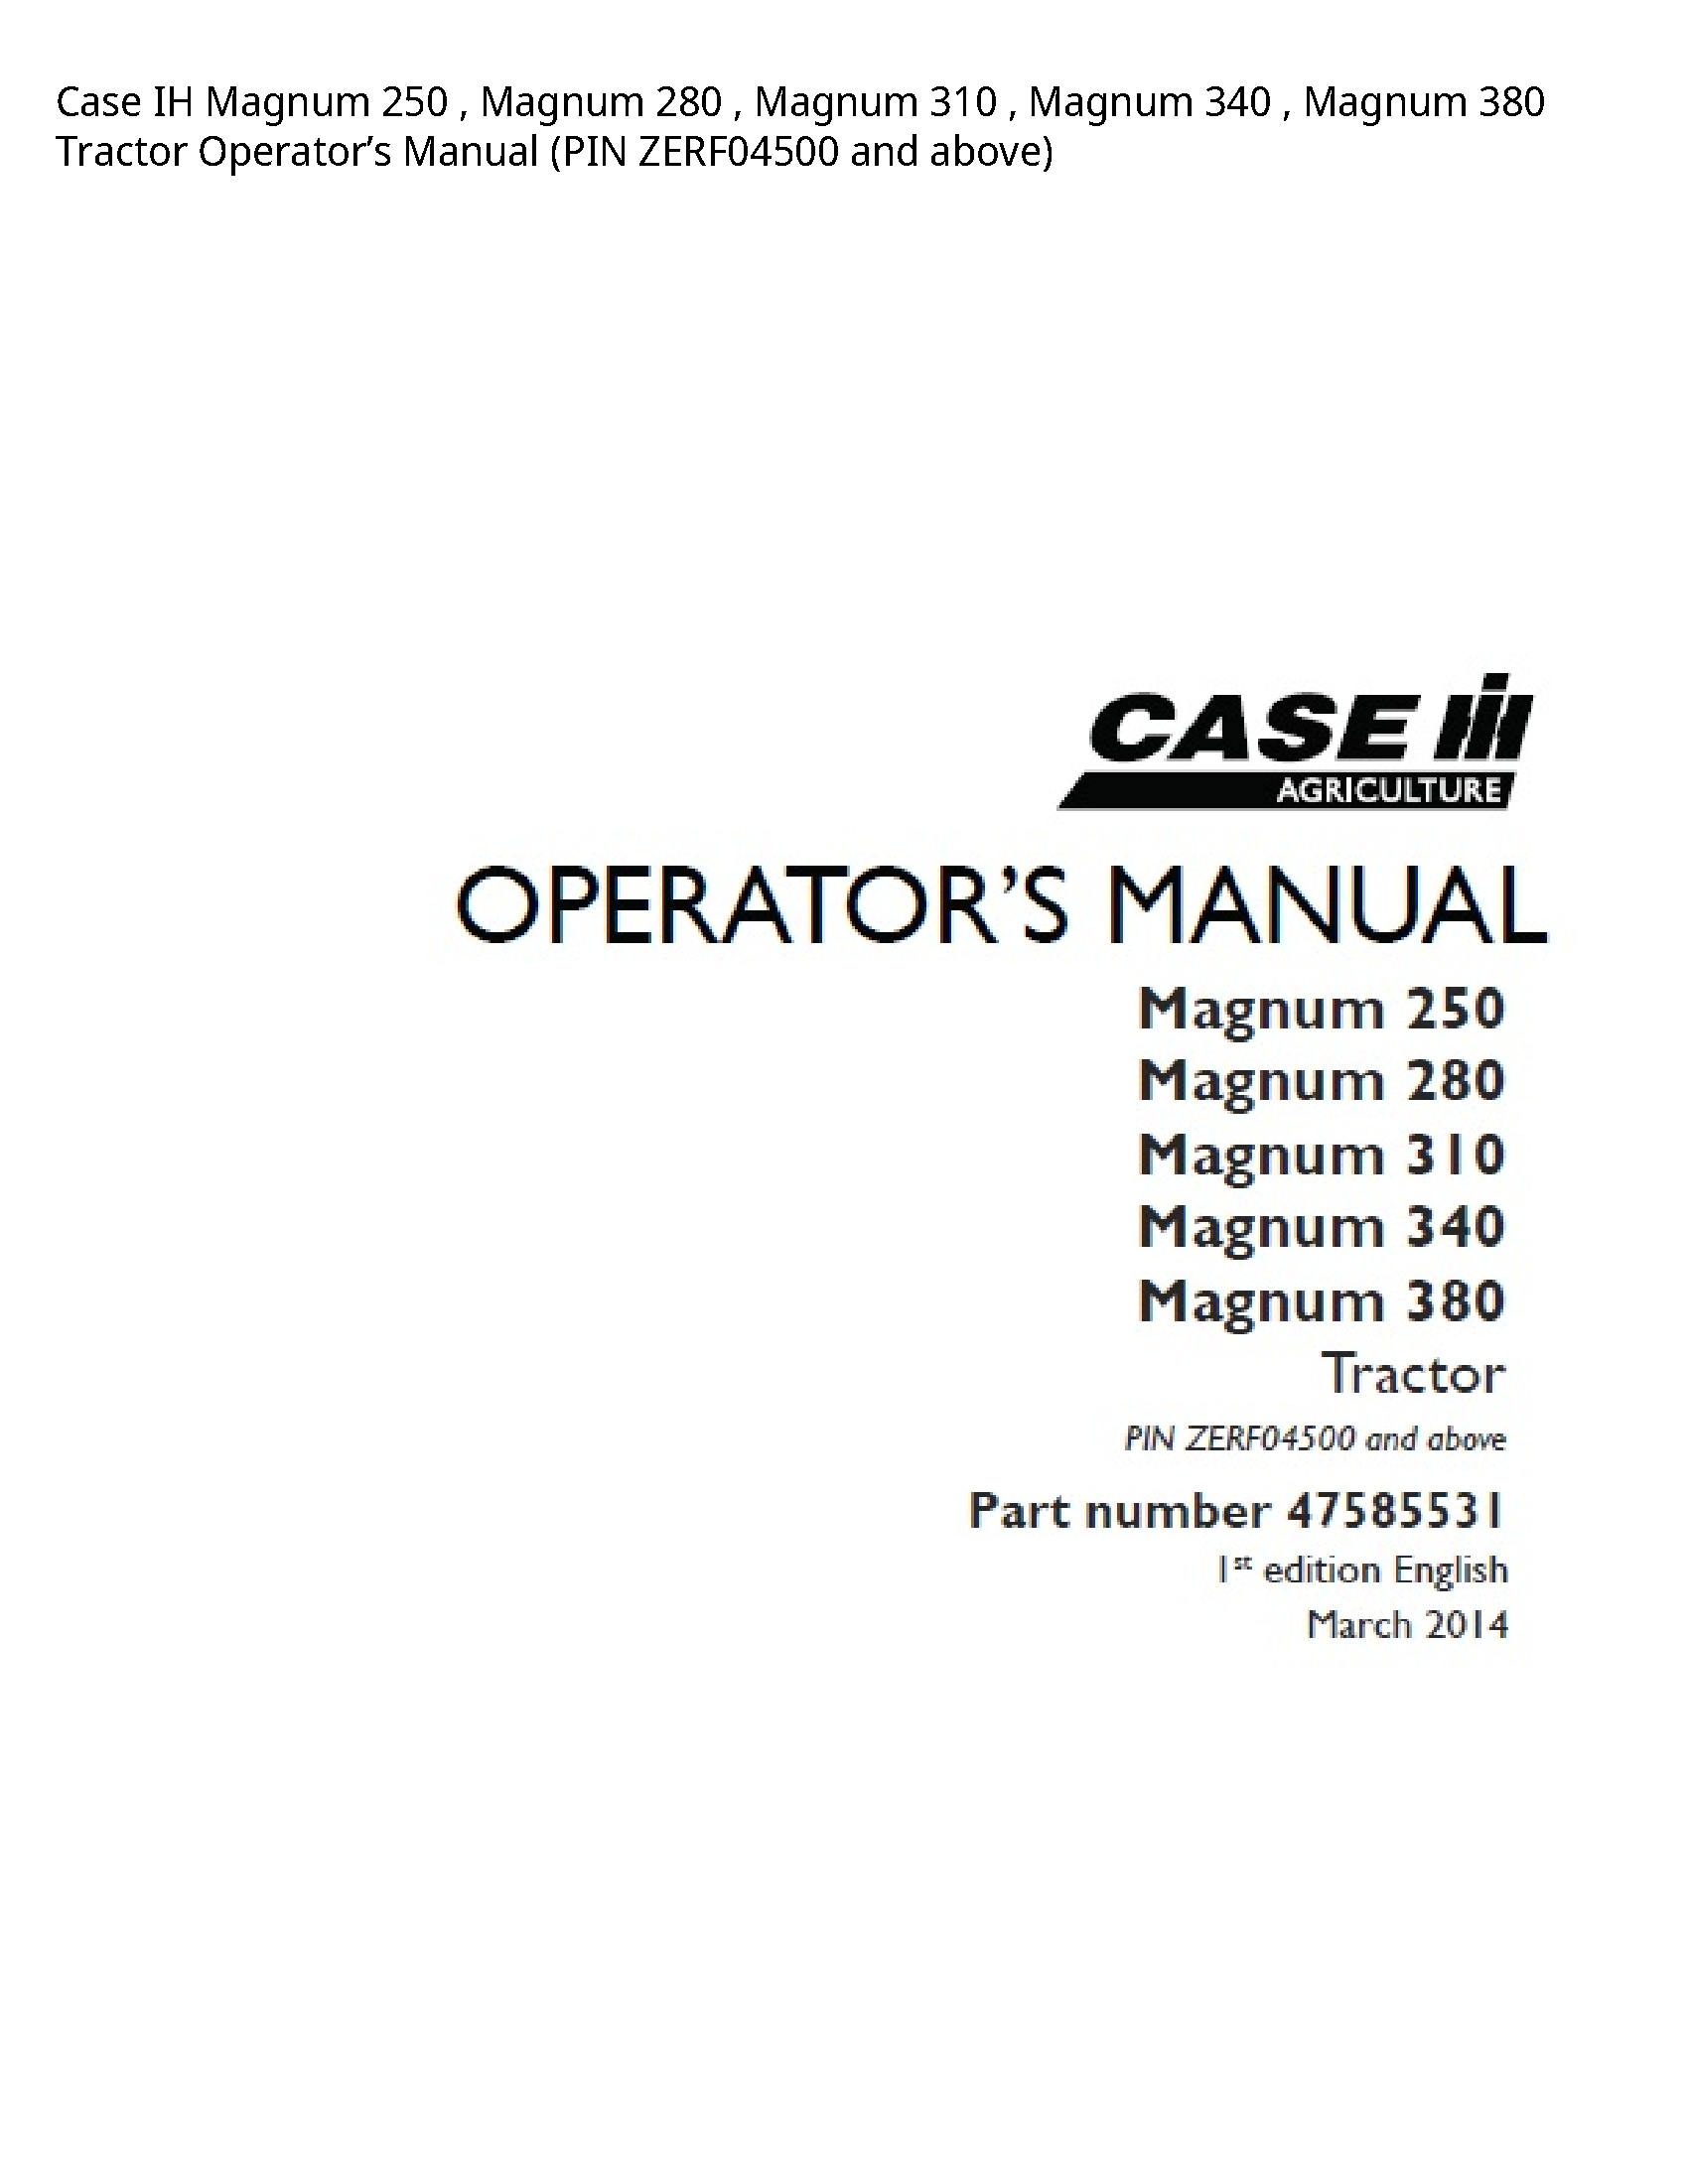 Case/Case IH 250 IH Magnum Magnum Magnum Magnum Magnum Tractor Operator’s manual